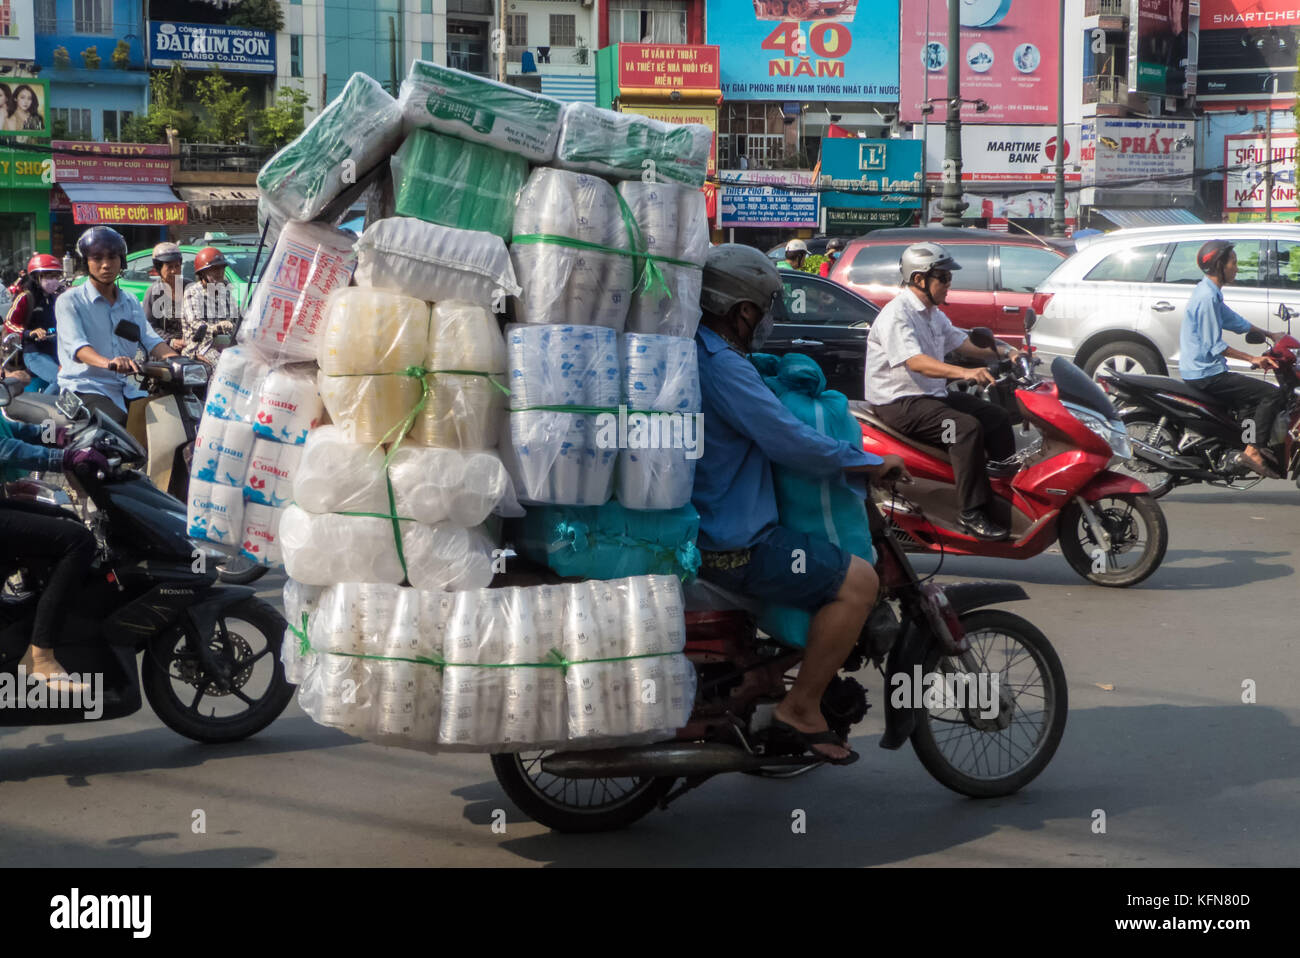 Carga loca en la parte trasera de un ciclomotor, Ngã sáu Cộng hoà, Hồ Chí Minh City, Viet Nam Foto de stock